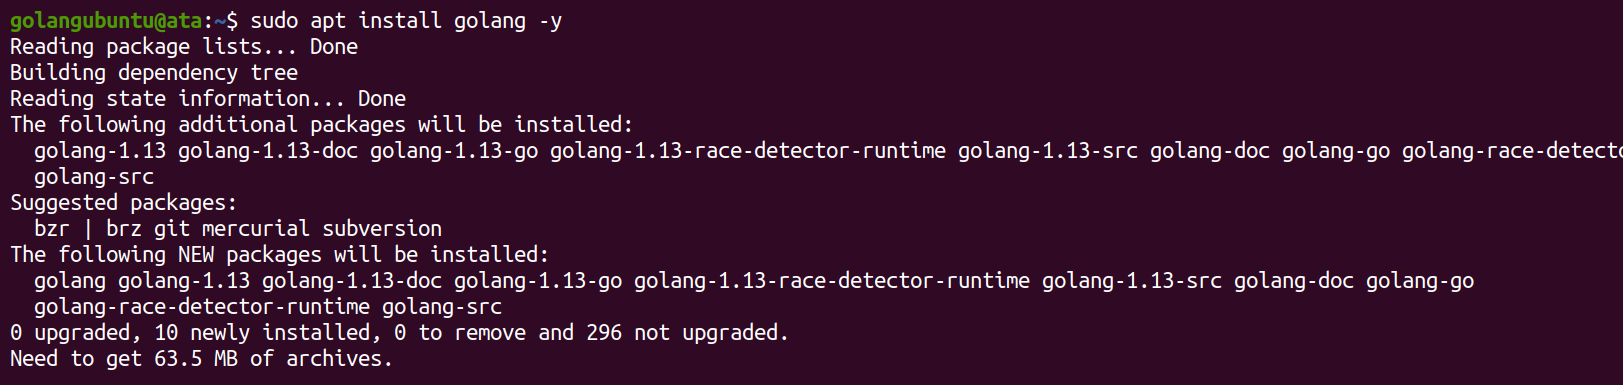 Installing Go on Ubuntu via the APT package manager